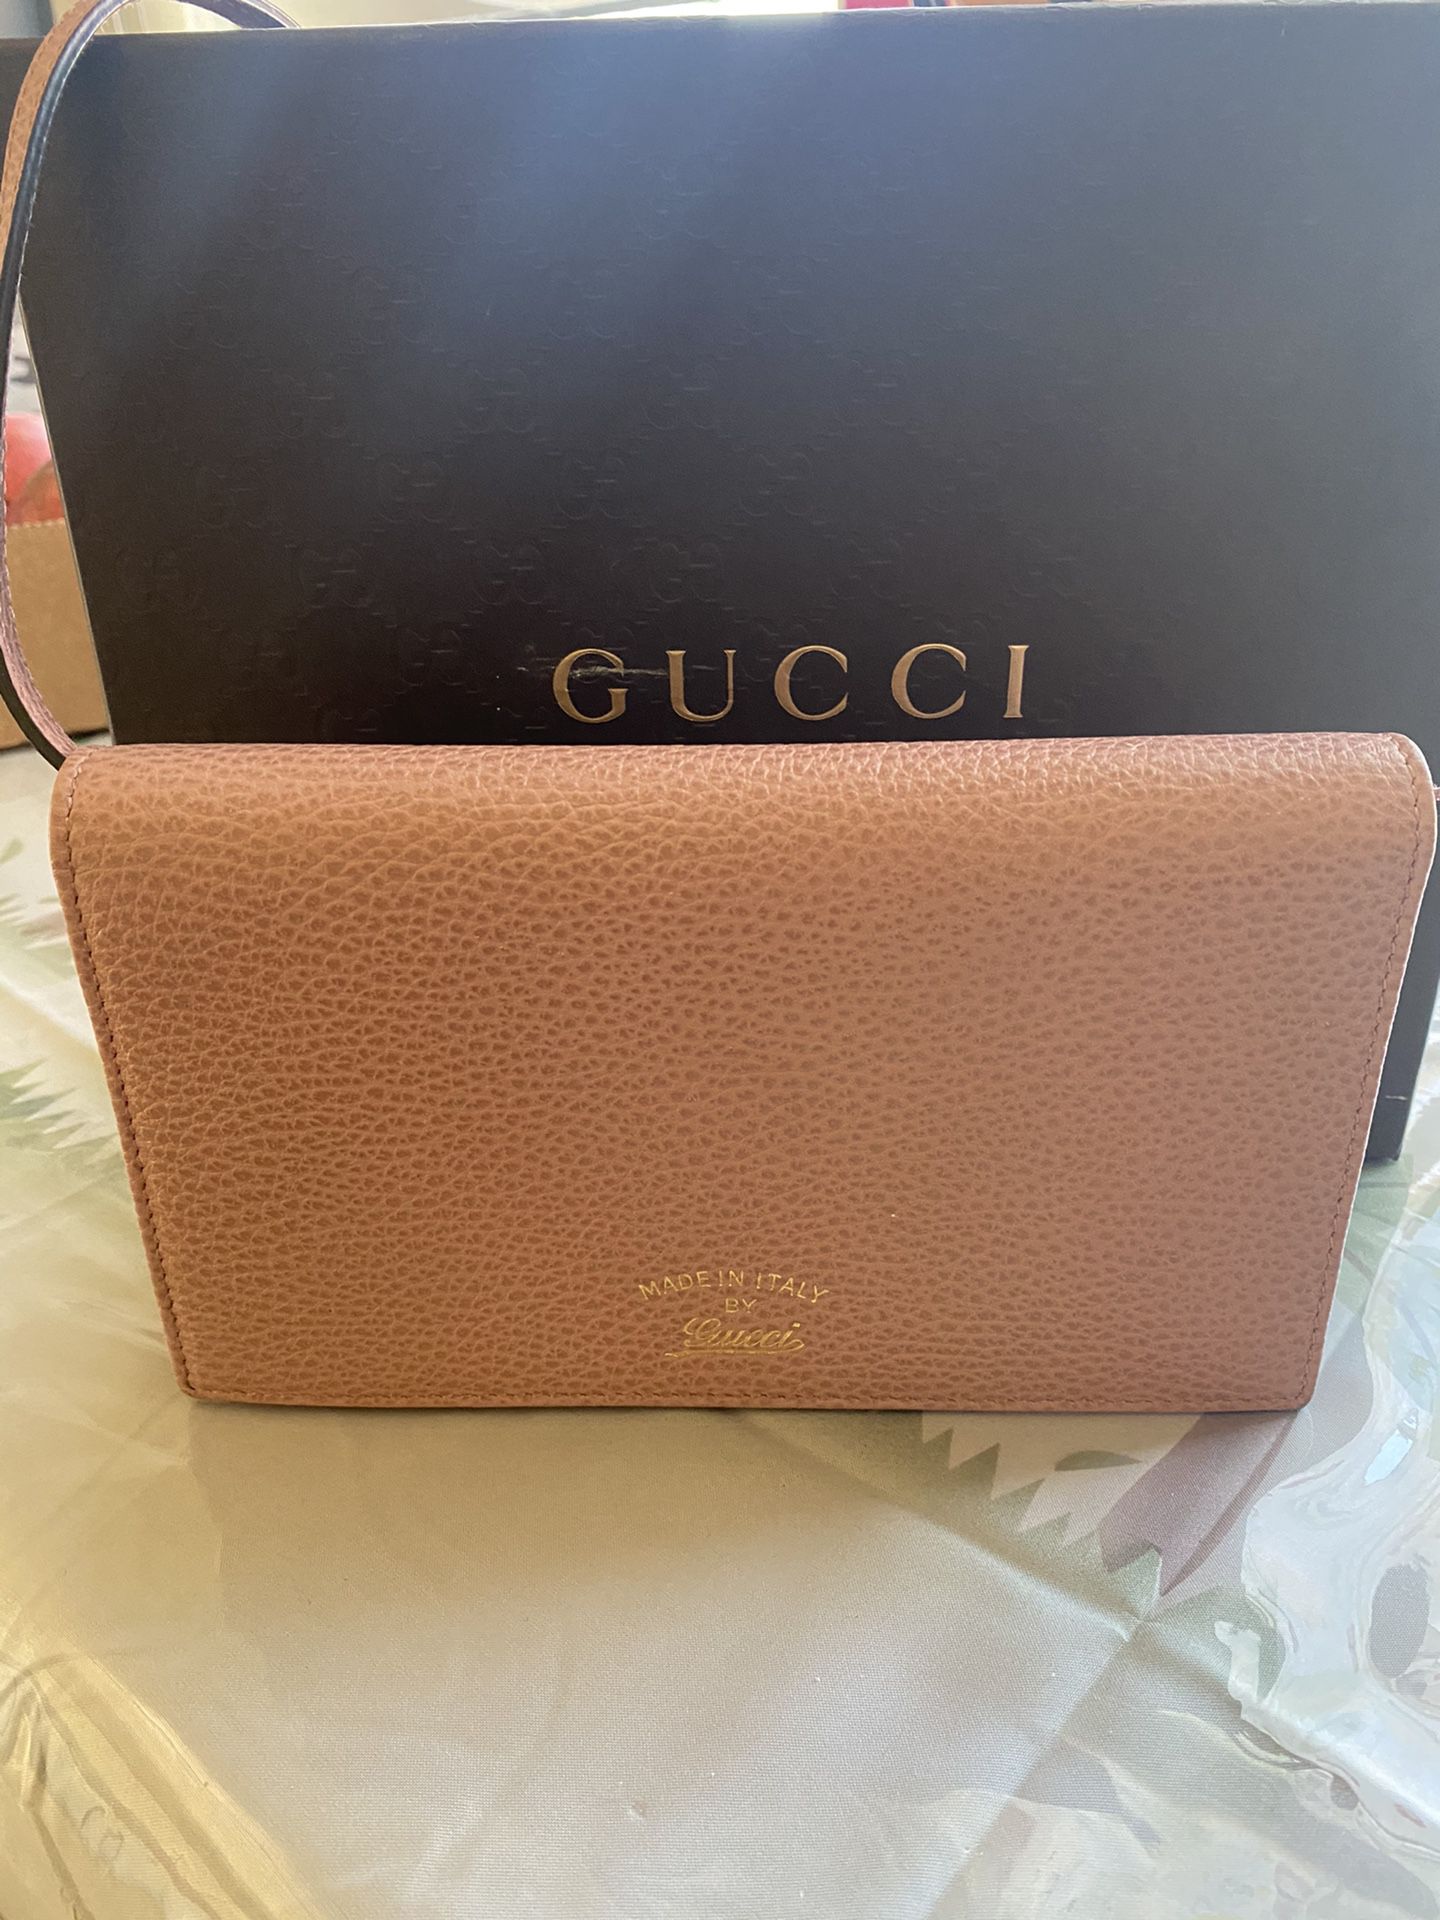 Gucci crossbody bag 100% authentic